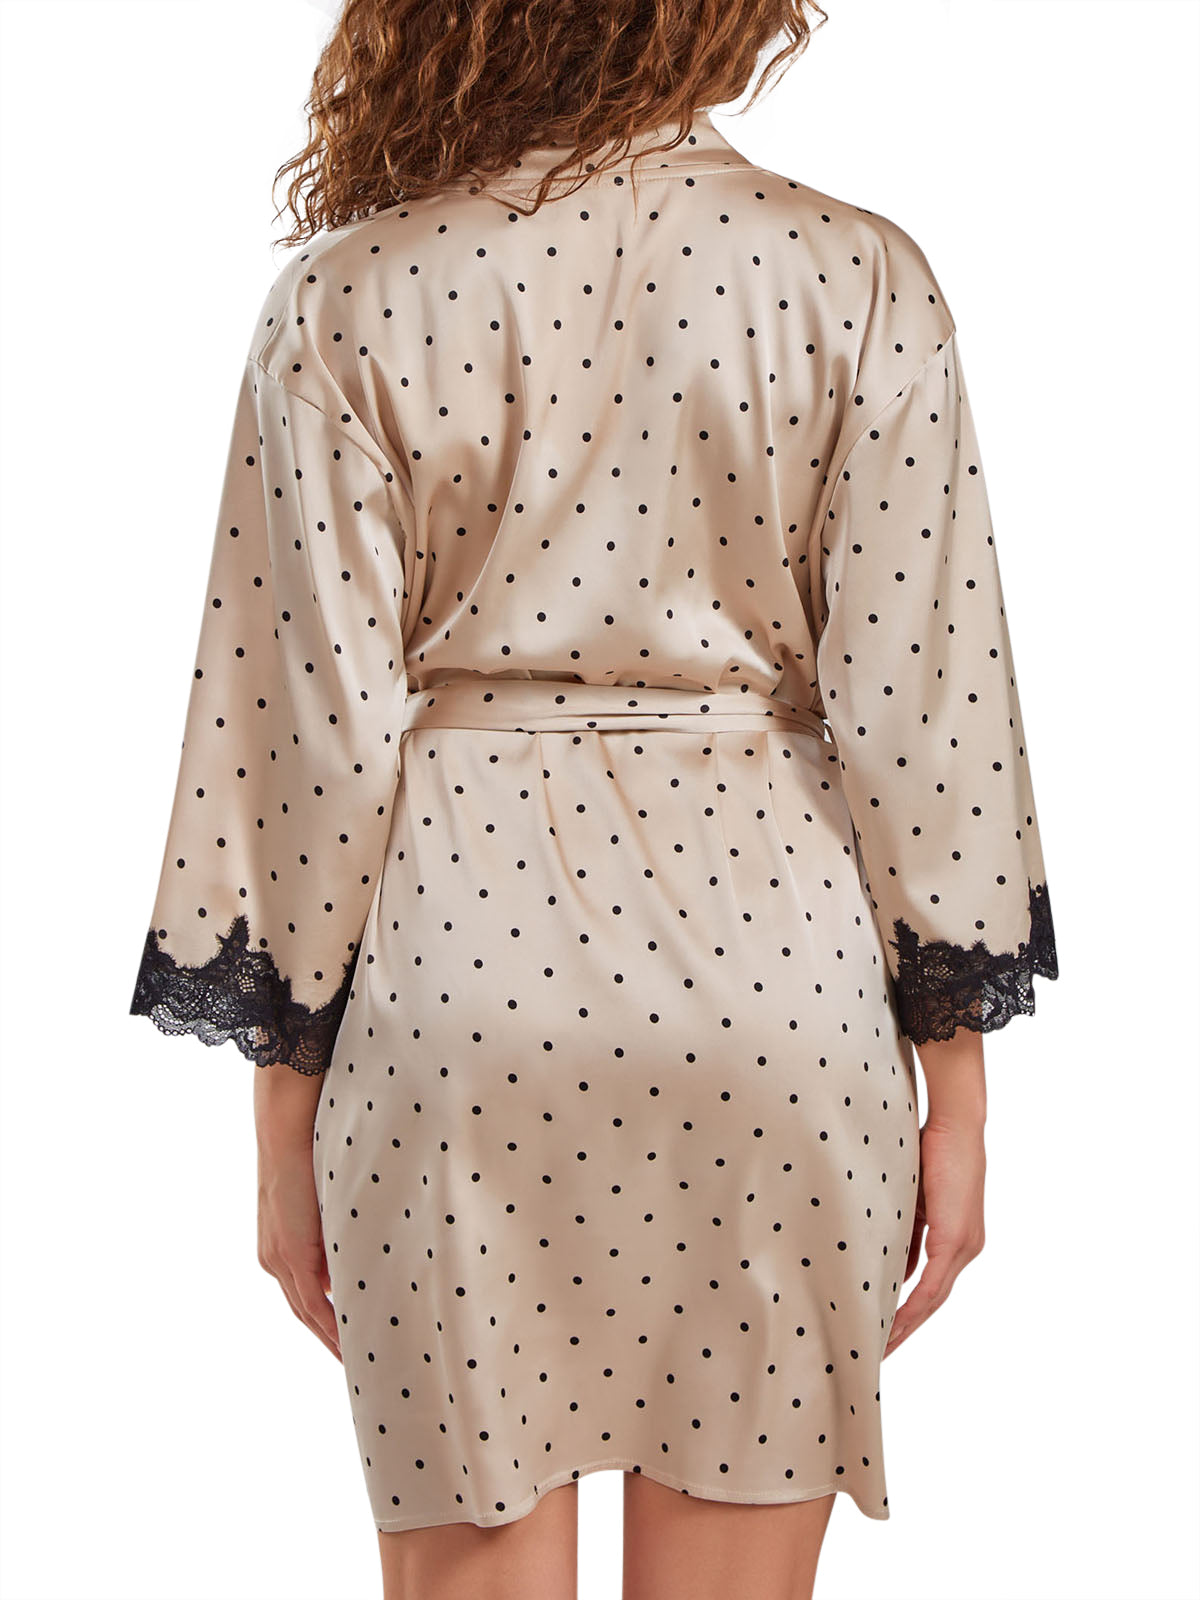 iCollection Robe Women's Diana Robe Loungewear